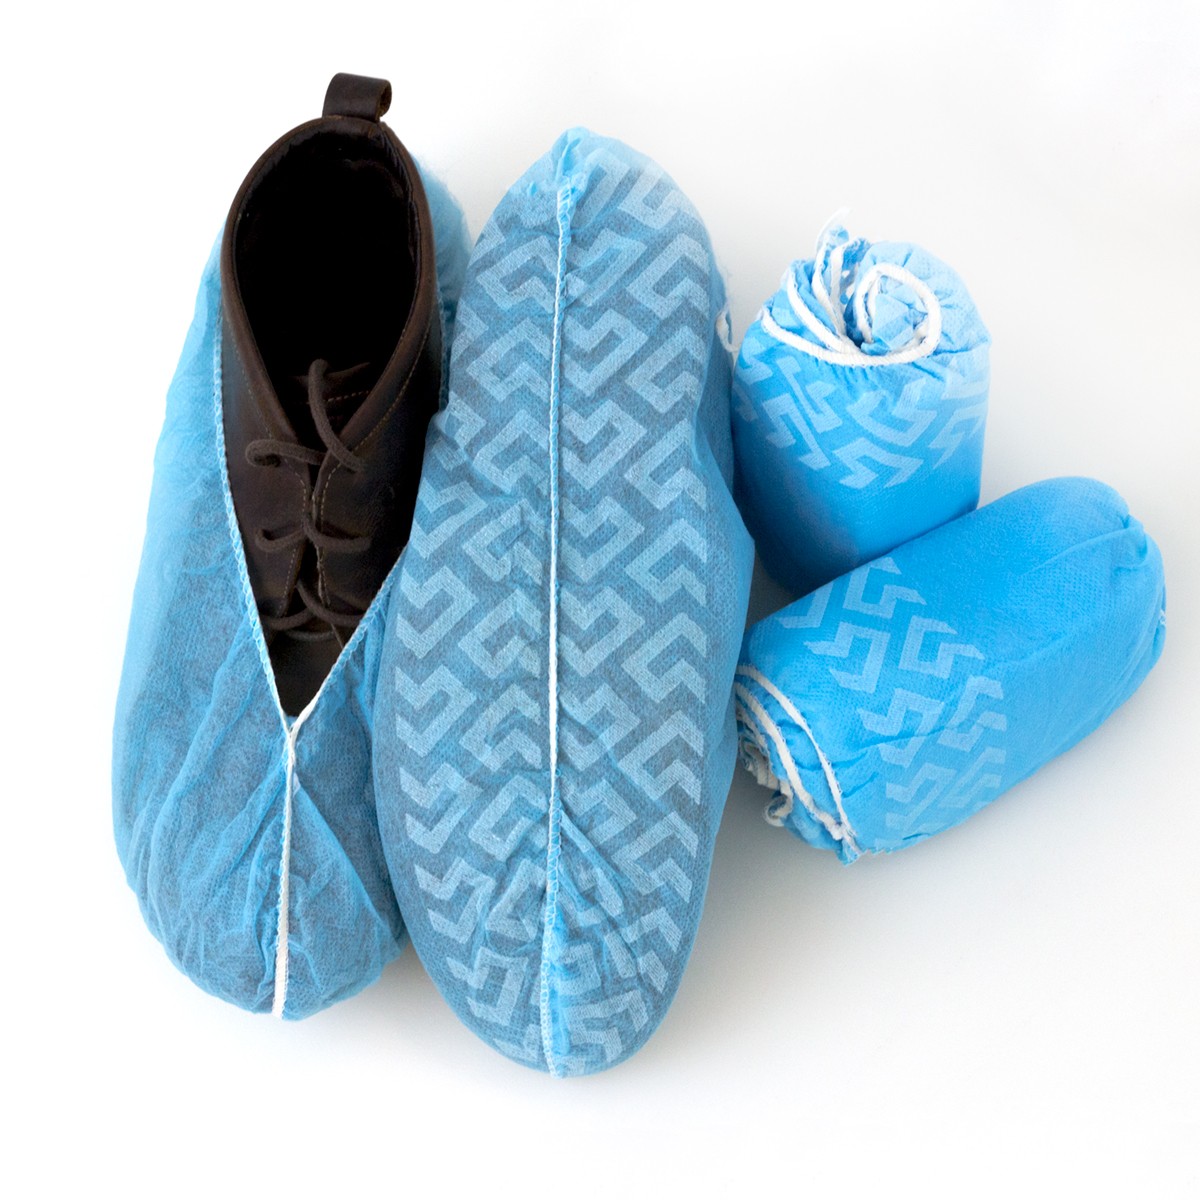 Kentop Shoe Covers Blue Elastic Shoe Covers Polypropylene Material Pack of 100 